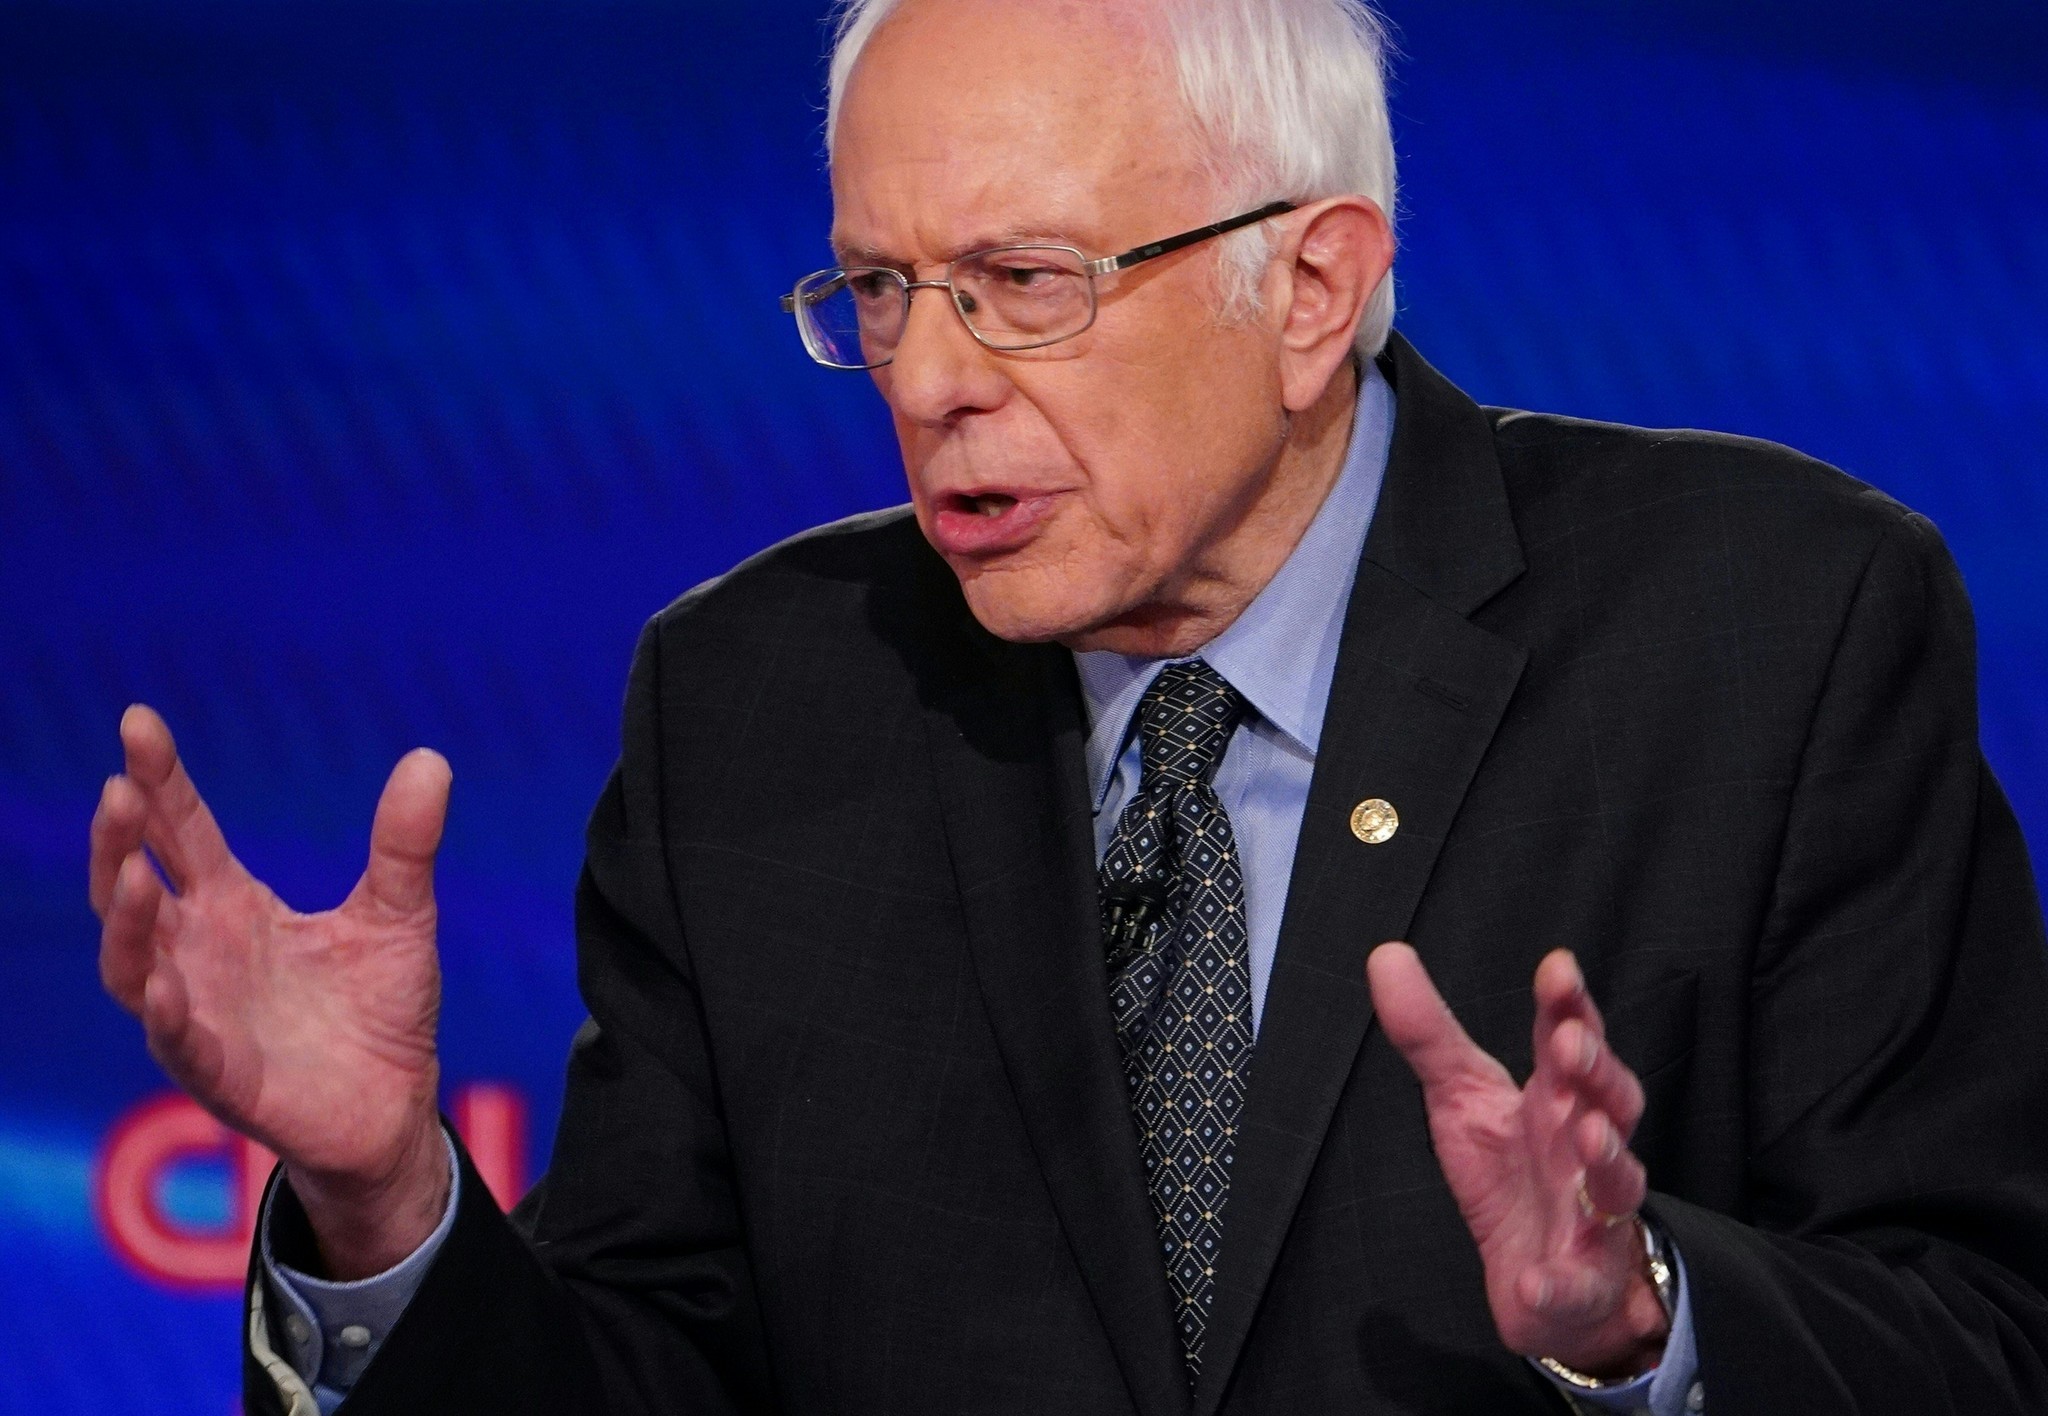 Bernie Sanders drops out of presidential race, making Joe Biden presumptive Democratic nominee